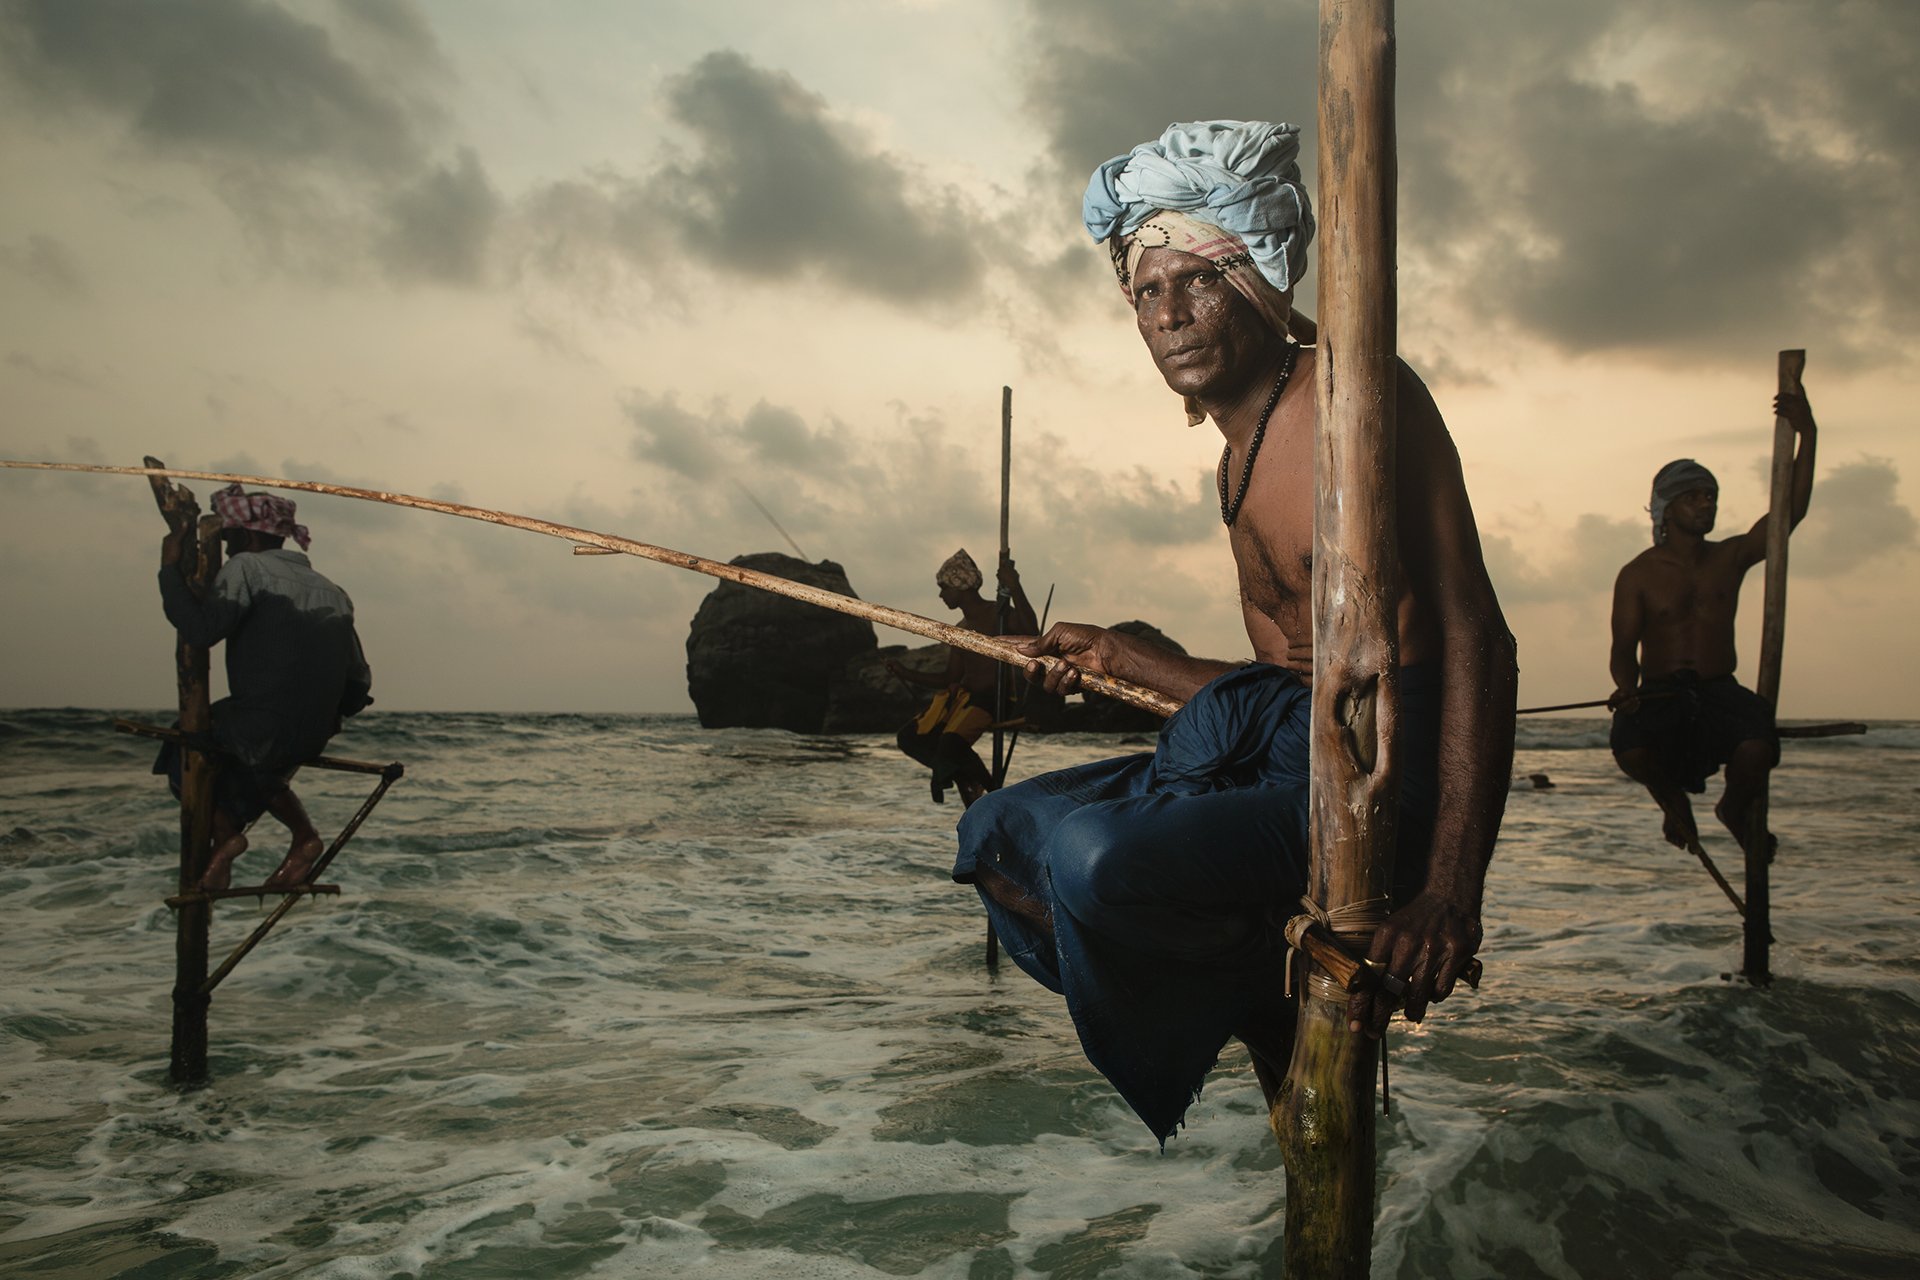 Giacomo Bruno Captures Sri Lanka's Fascinating Stilt Fishing Tradition